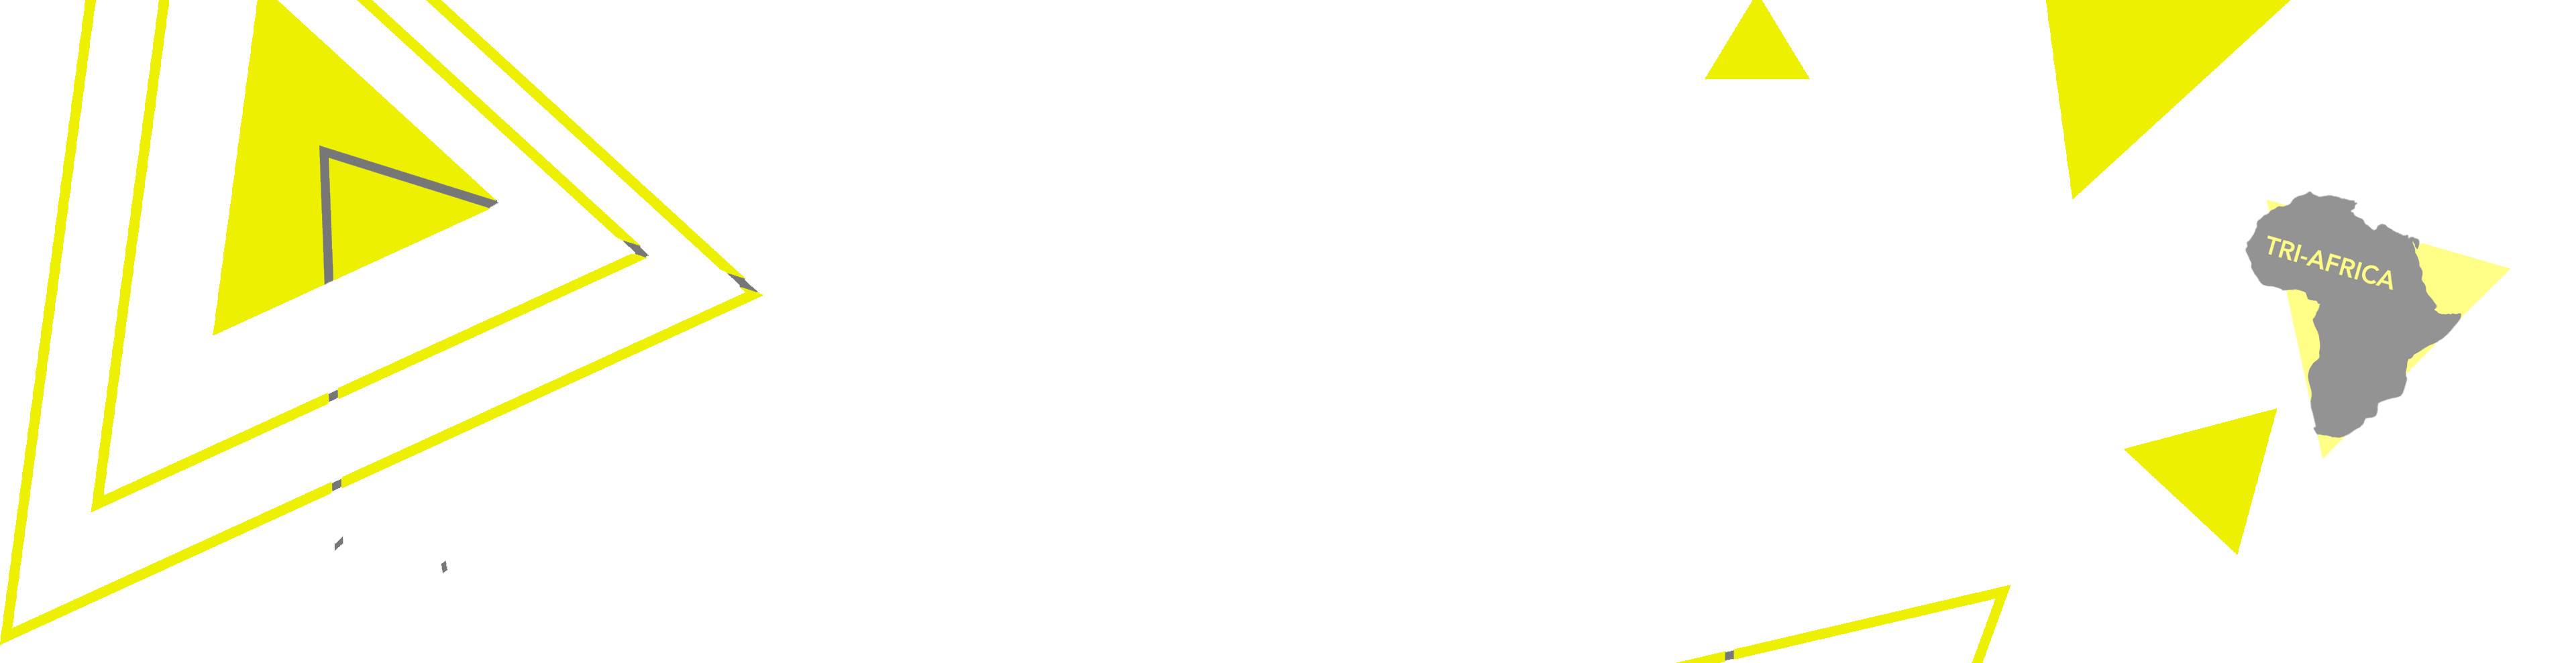 Monatic brand top image